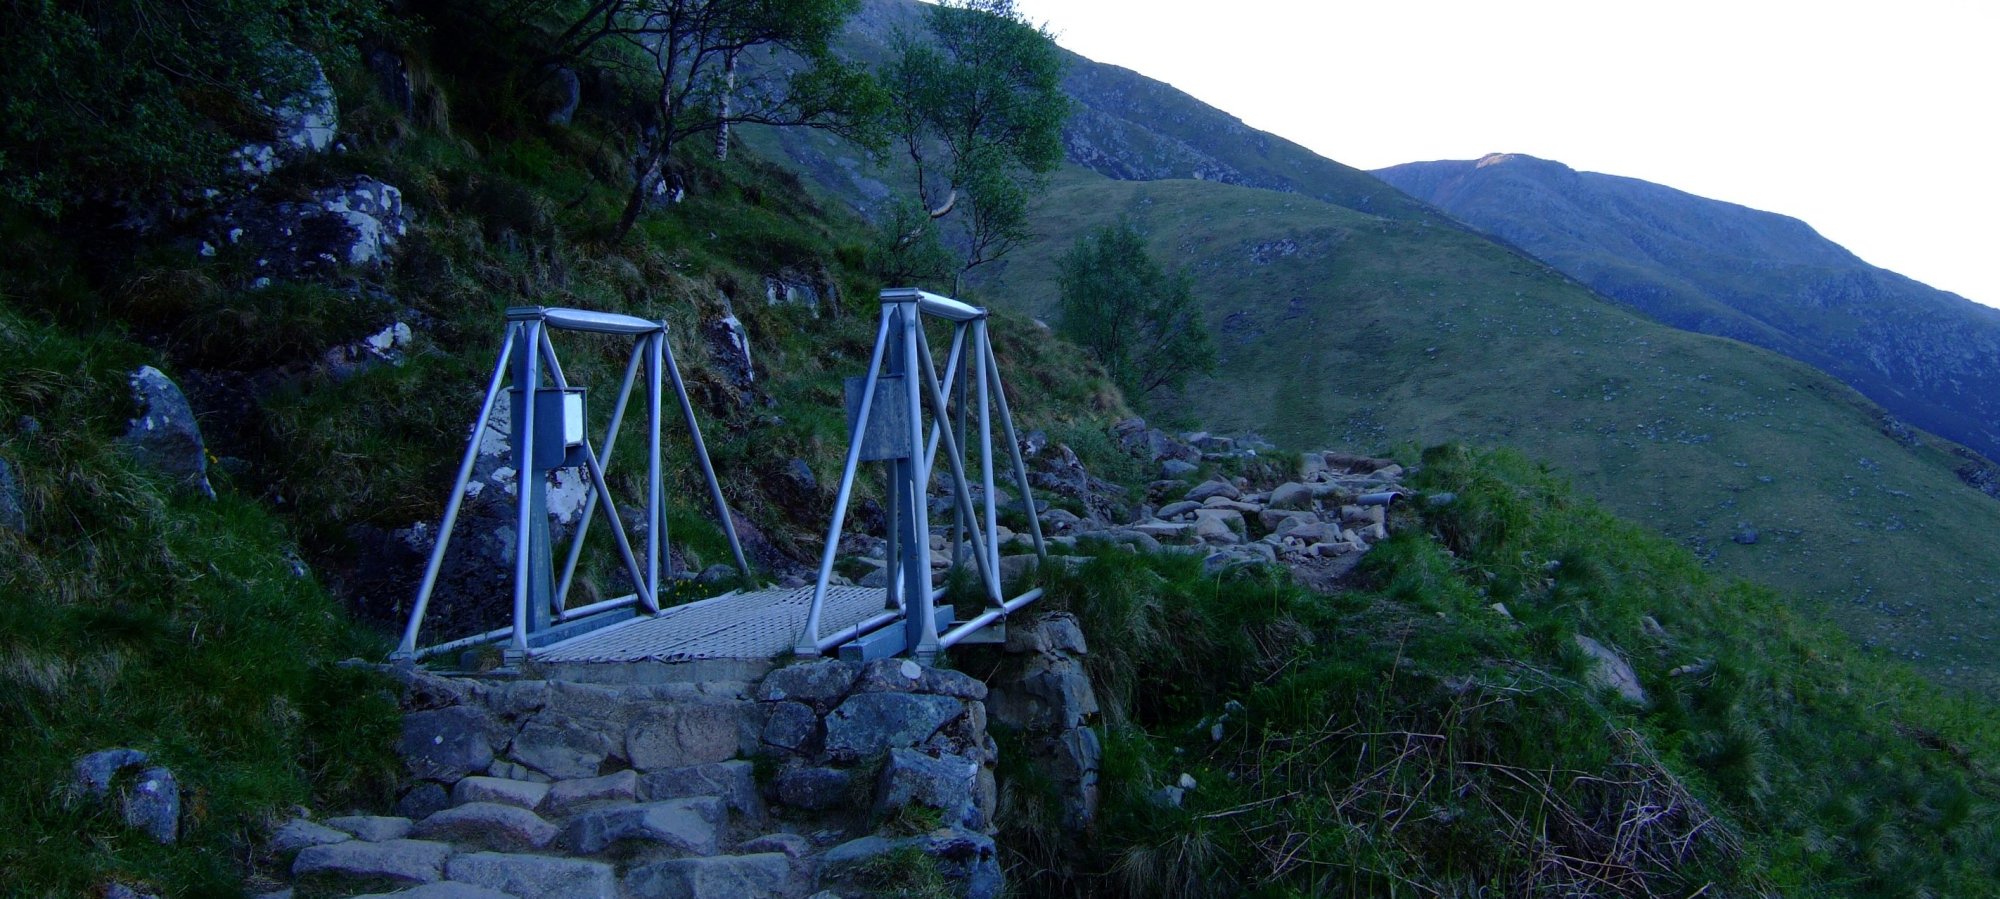 Bridge on the path to Ben Nevis